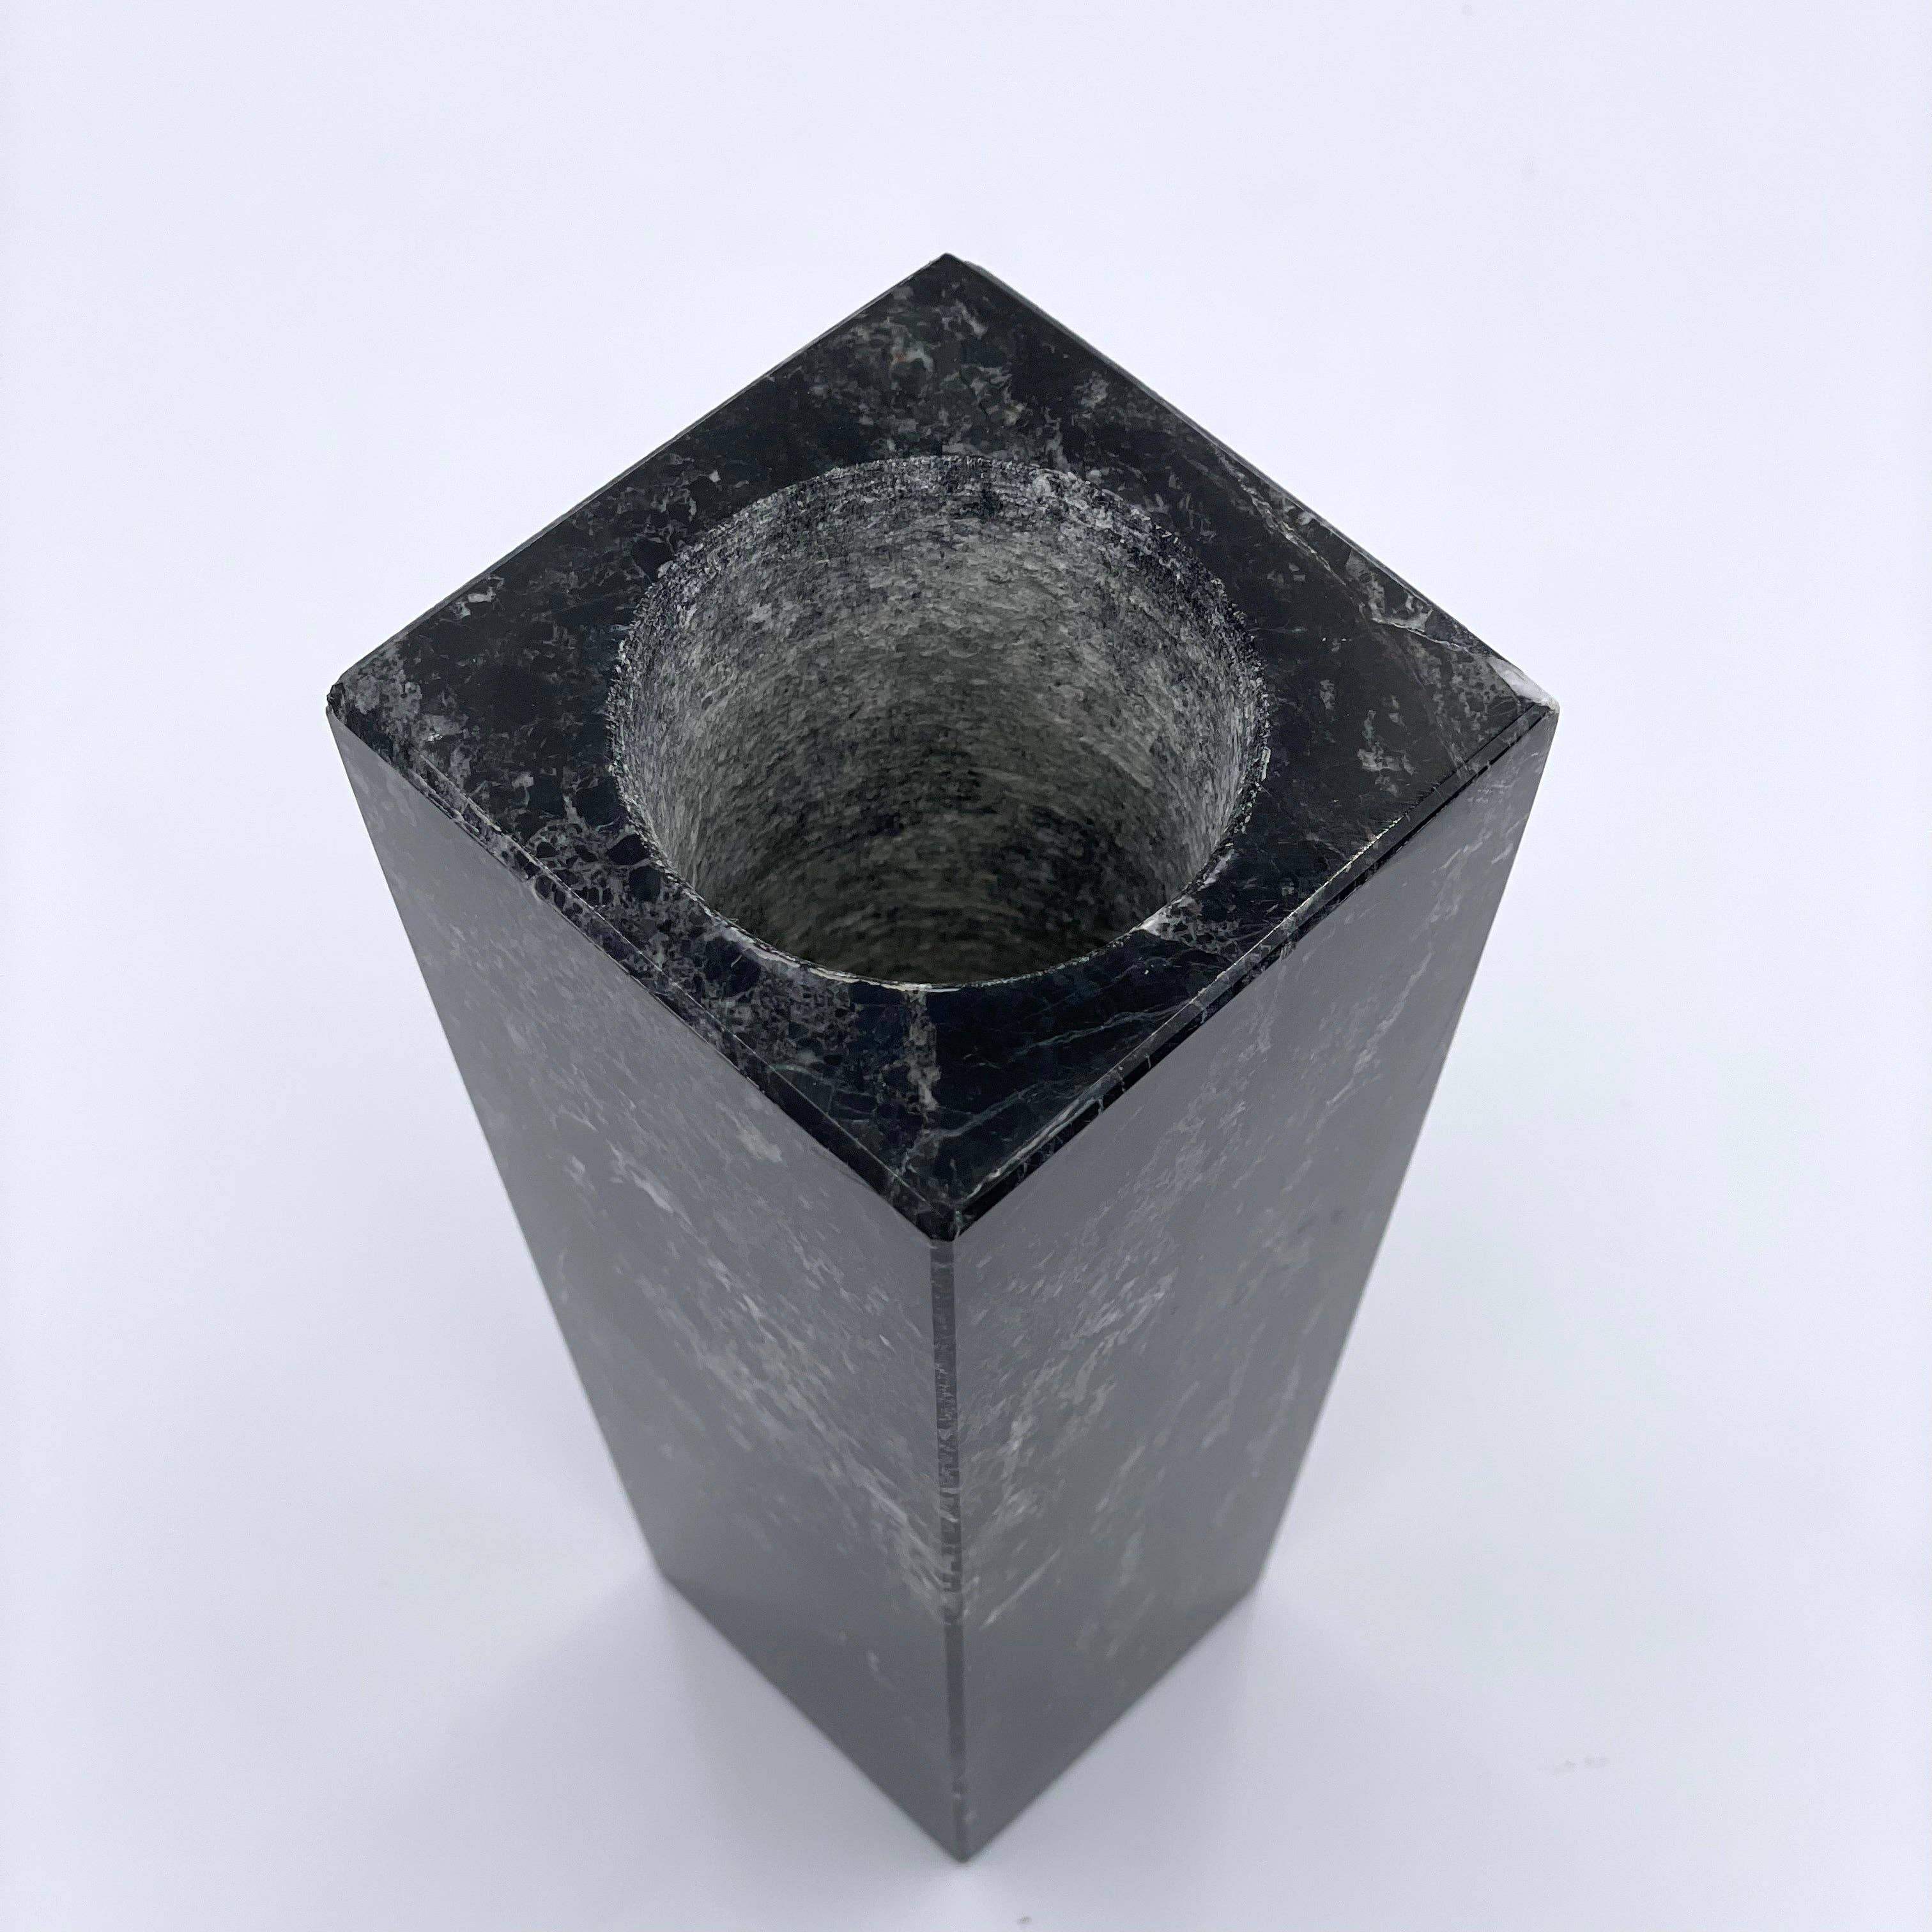 6" Square Vase - Marble and Onyx: Black Zebra Marble